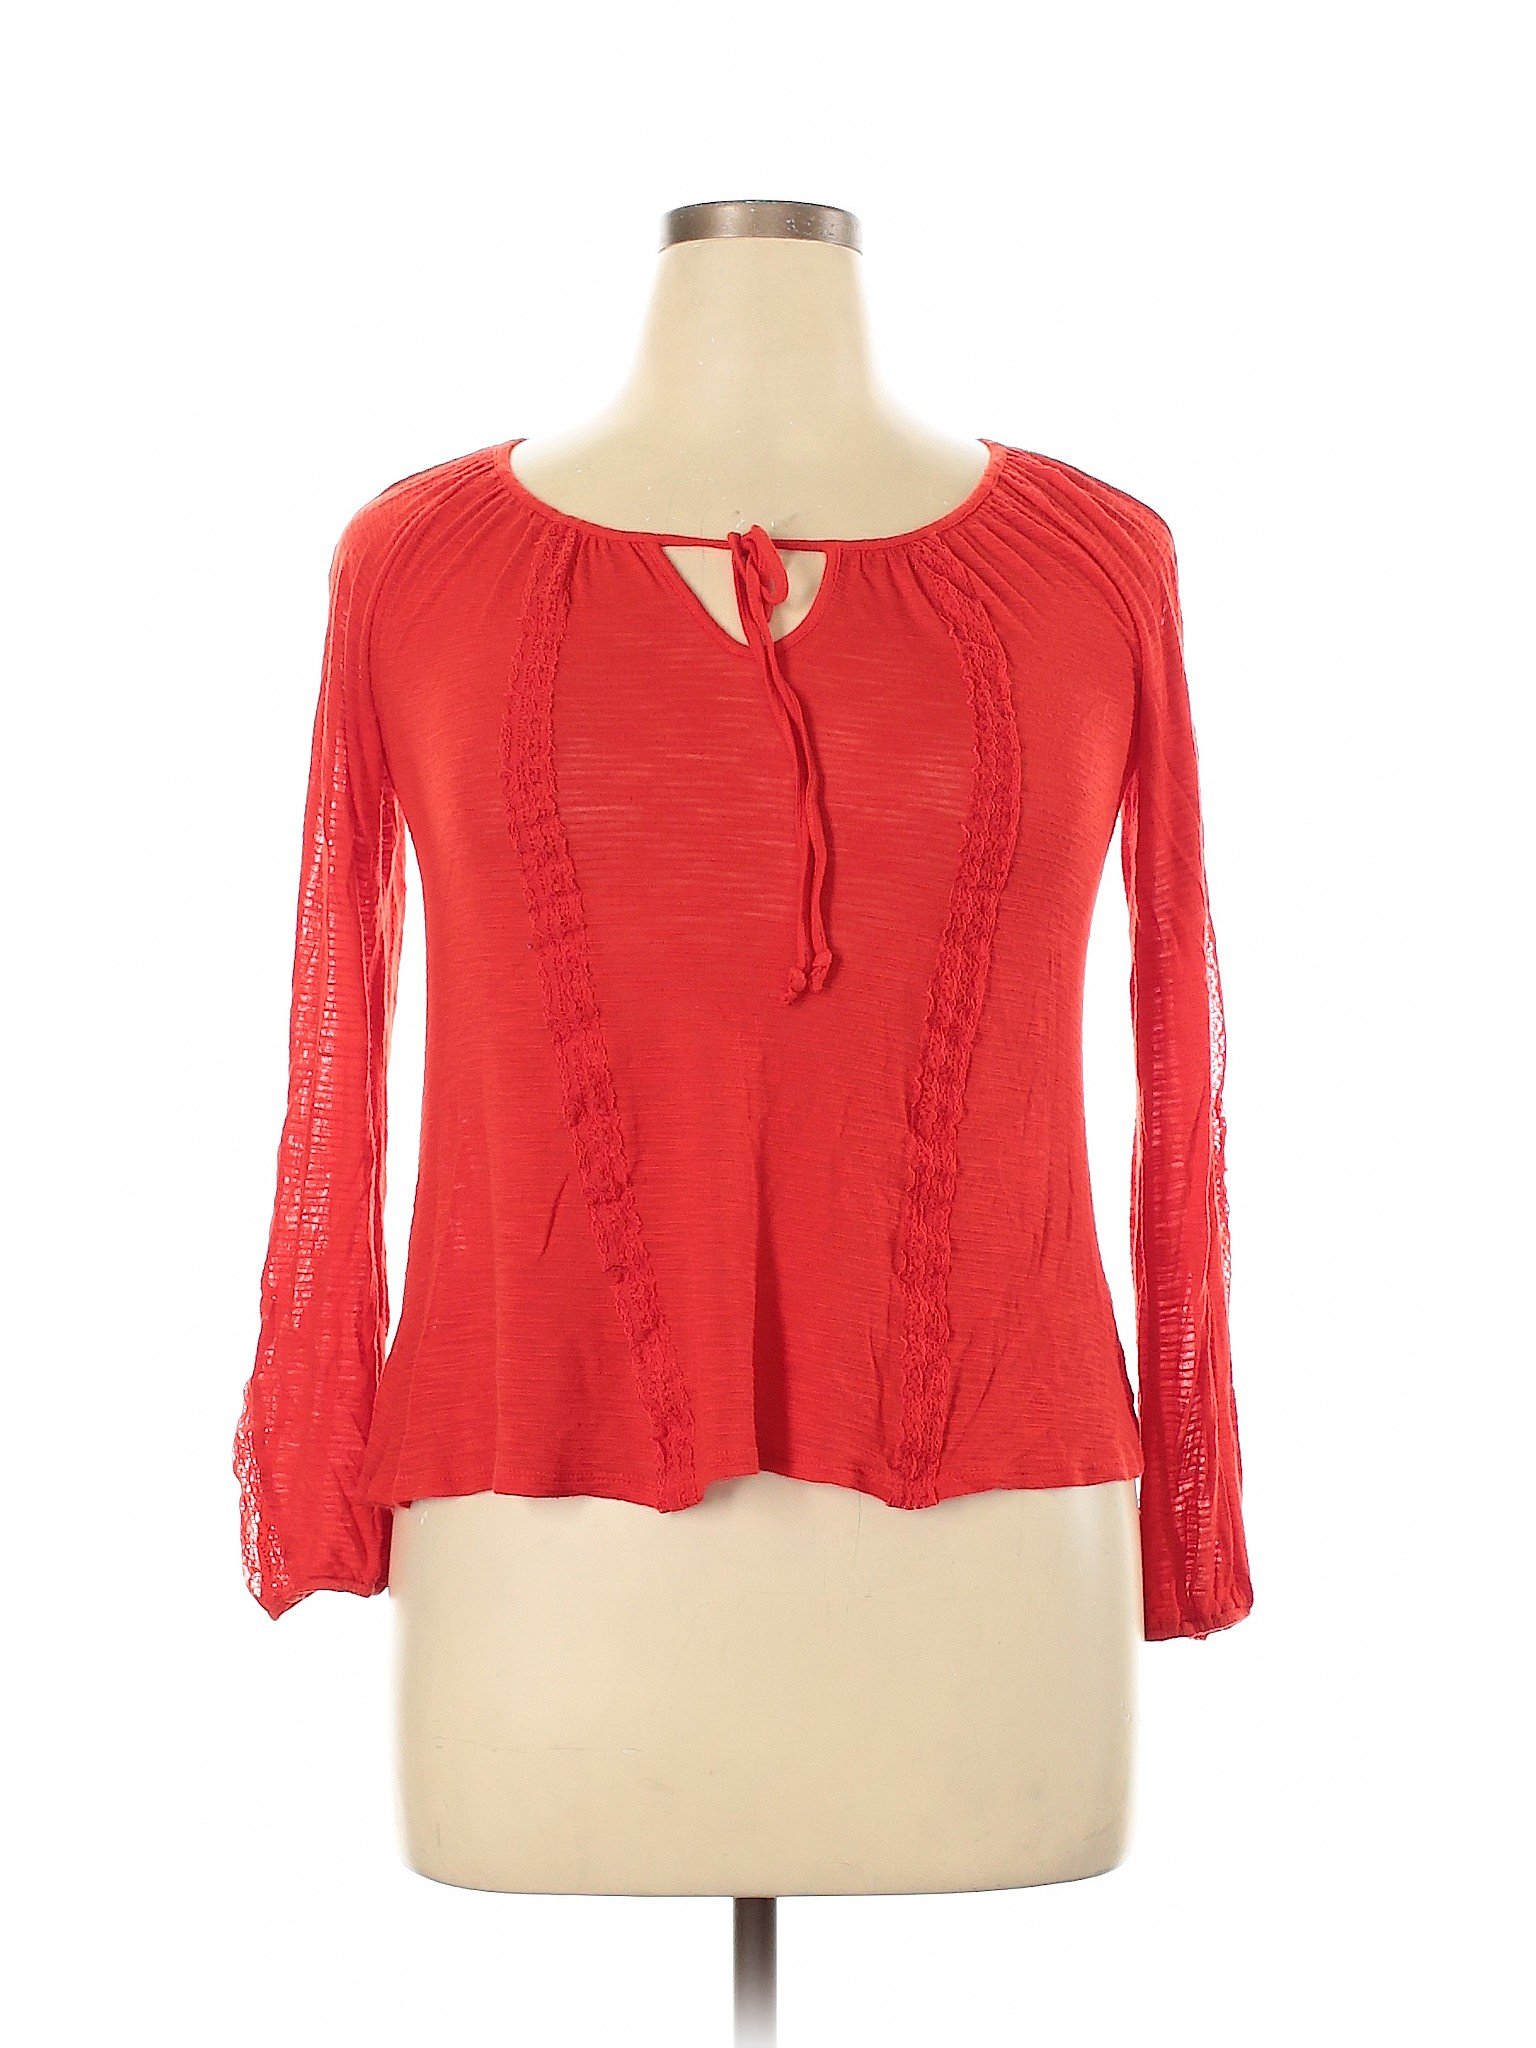 Cable & Gauge Women Red Long Sleeve Top M | eBay